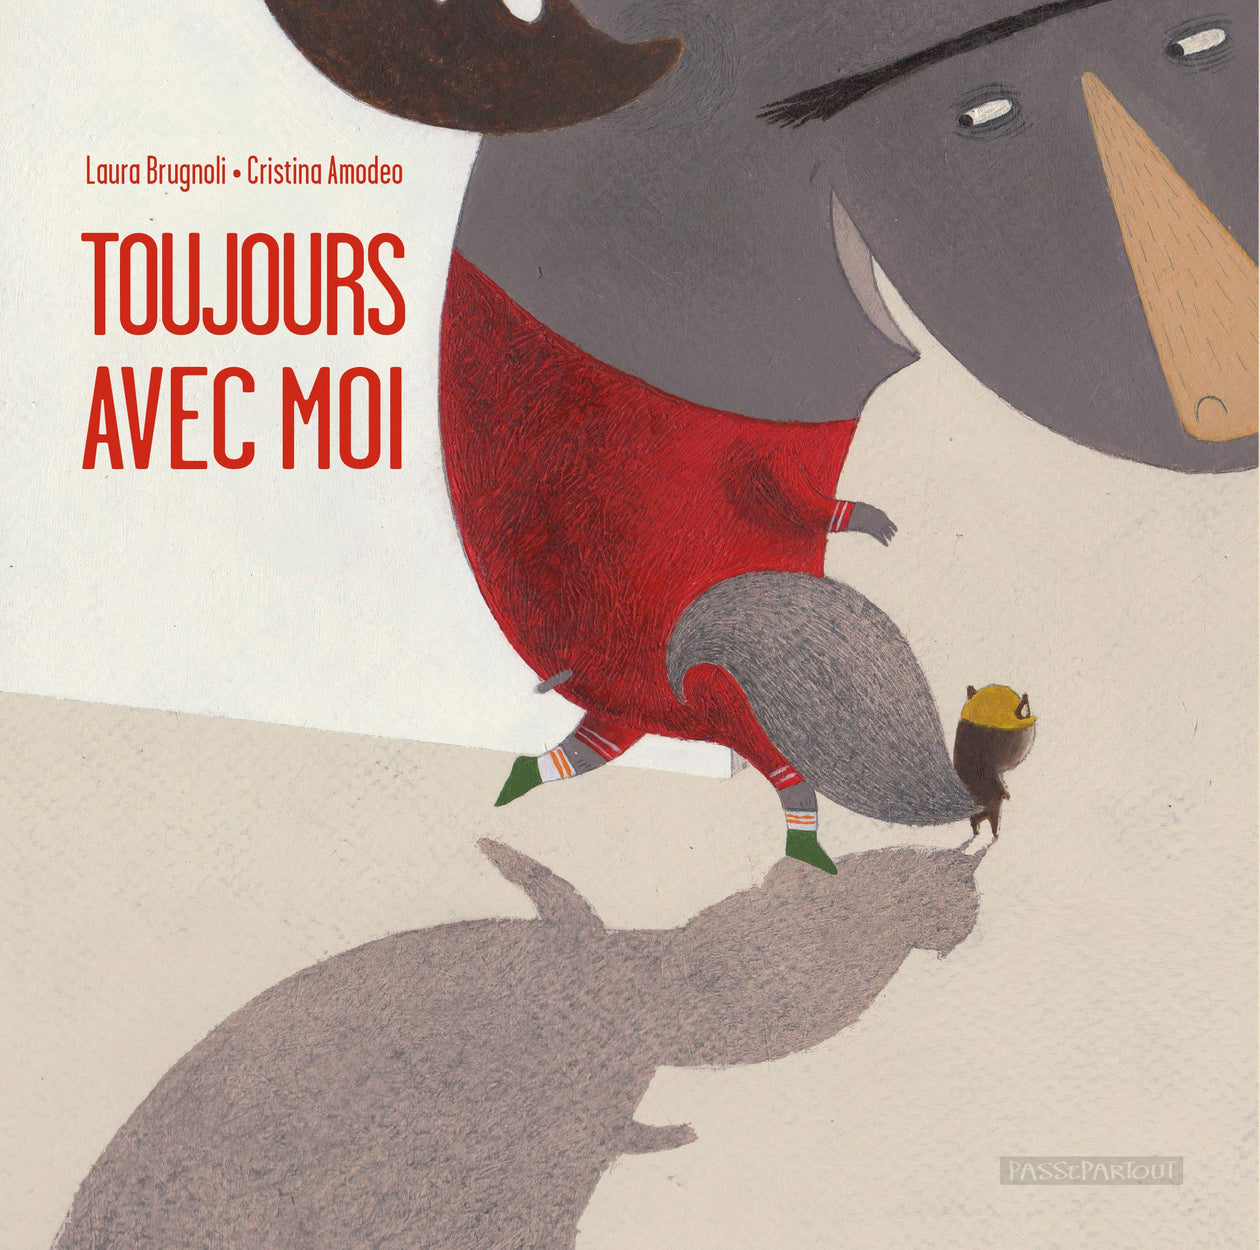 Laura Brugnoli: Toujours avec Moi, illustrated by Cristina Amodeo